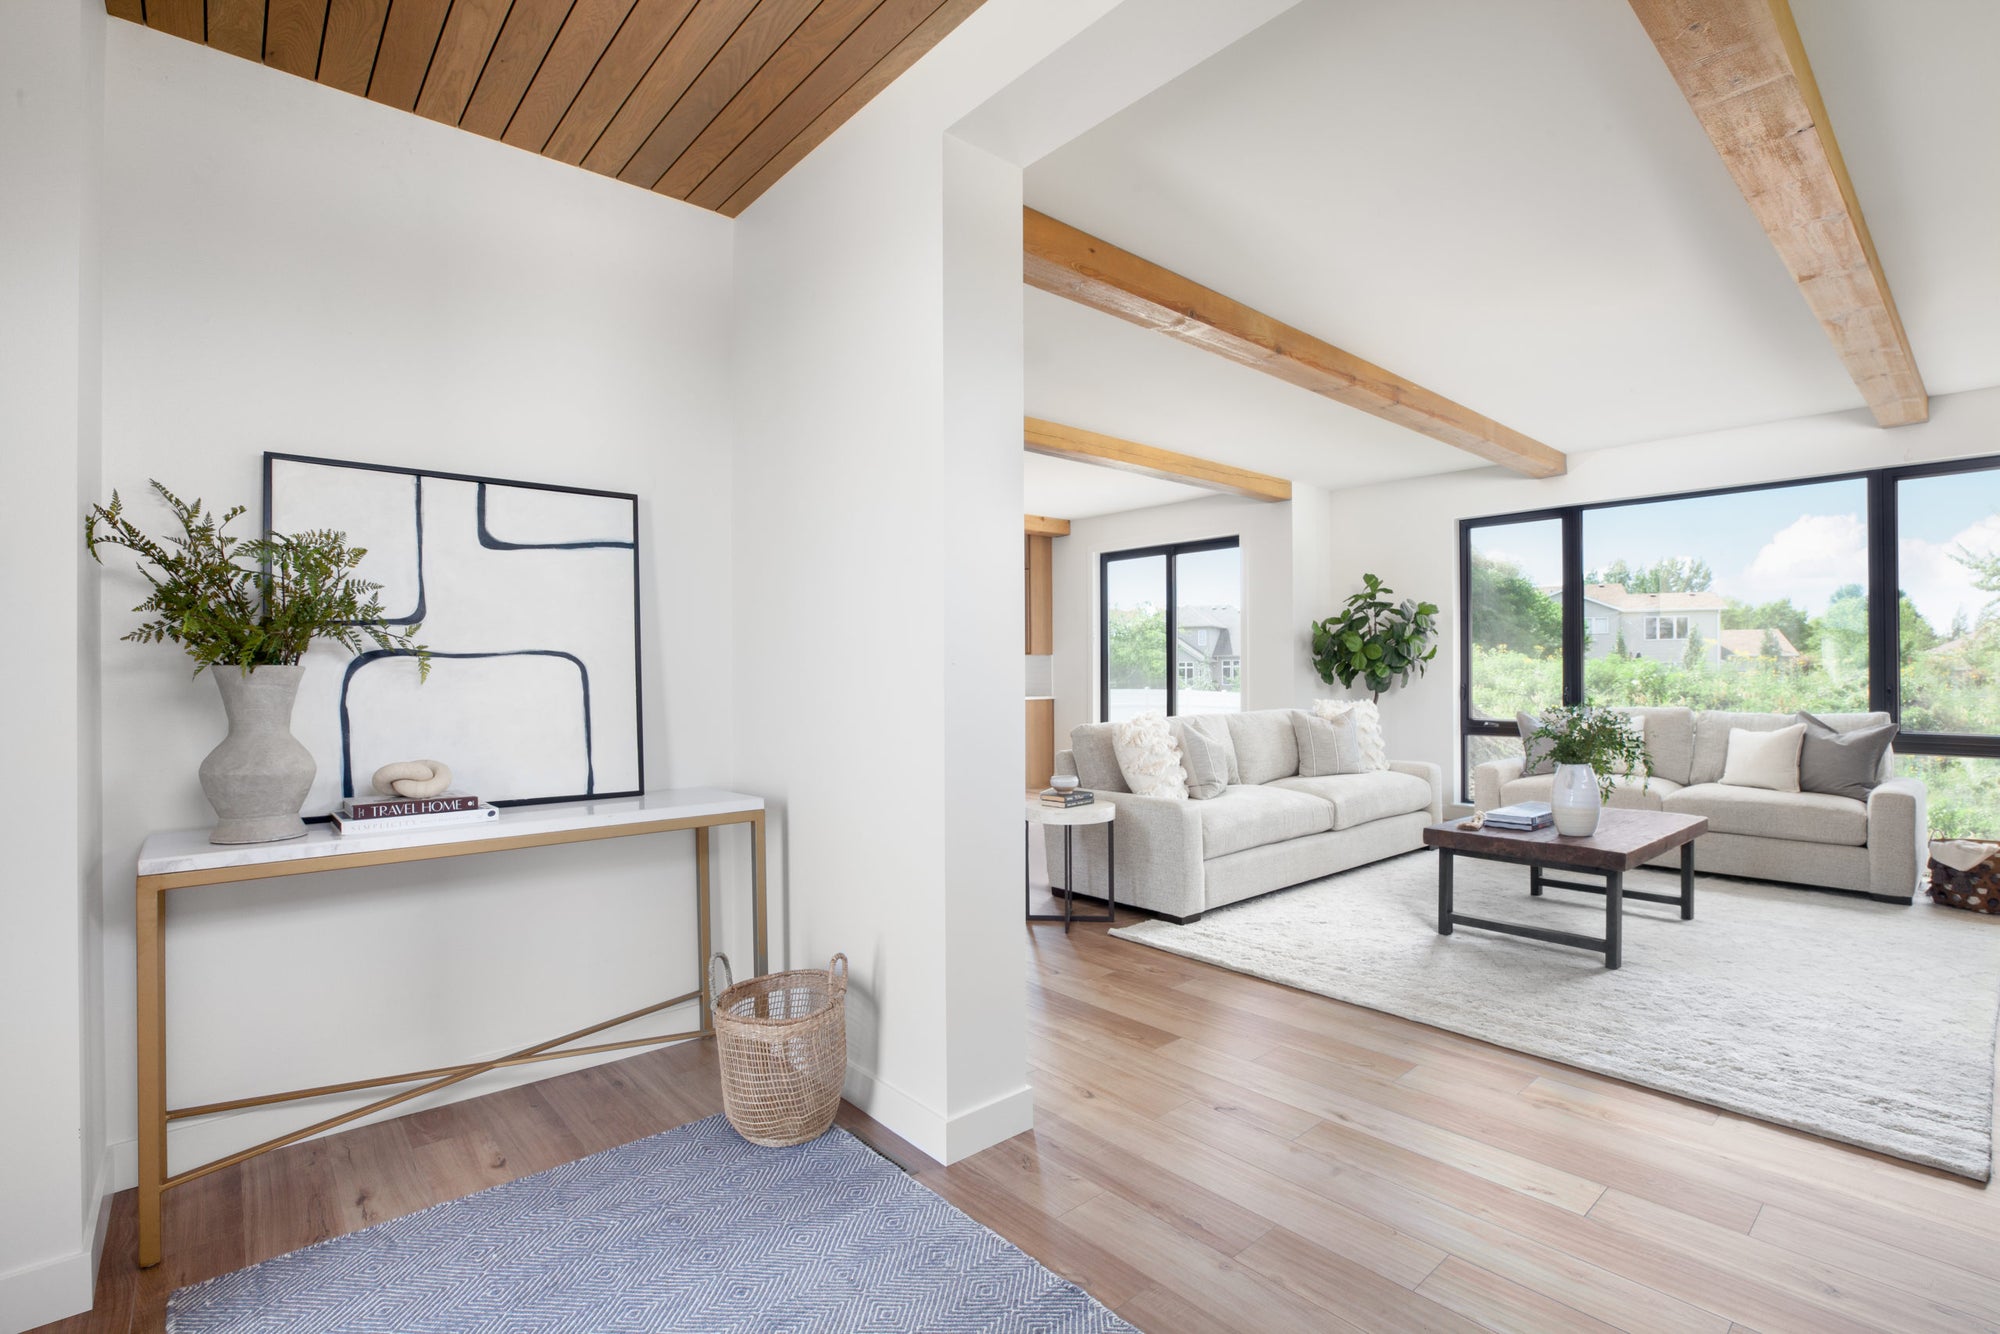 Reclaimed Wood Ceiling Beams and Mantel | Dakota Timber Company | Rustic Timber Beams | Studio West Fargo, ND | Modern Home Design